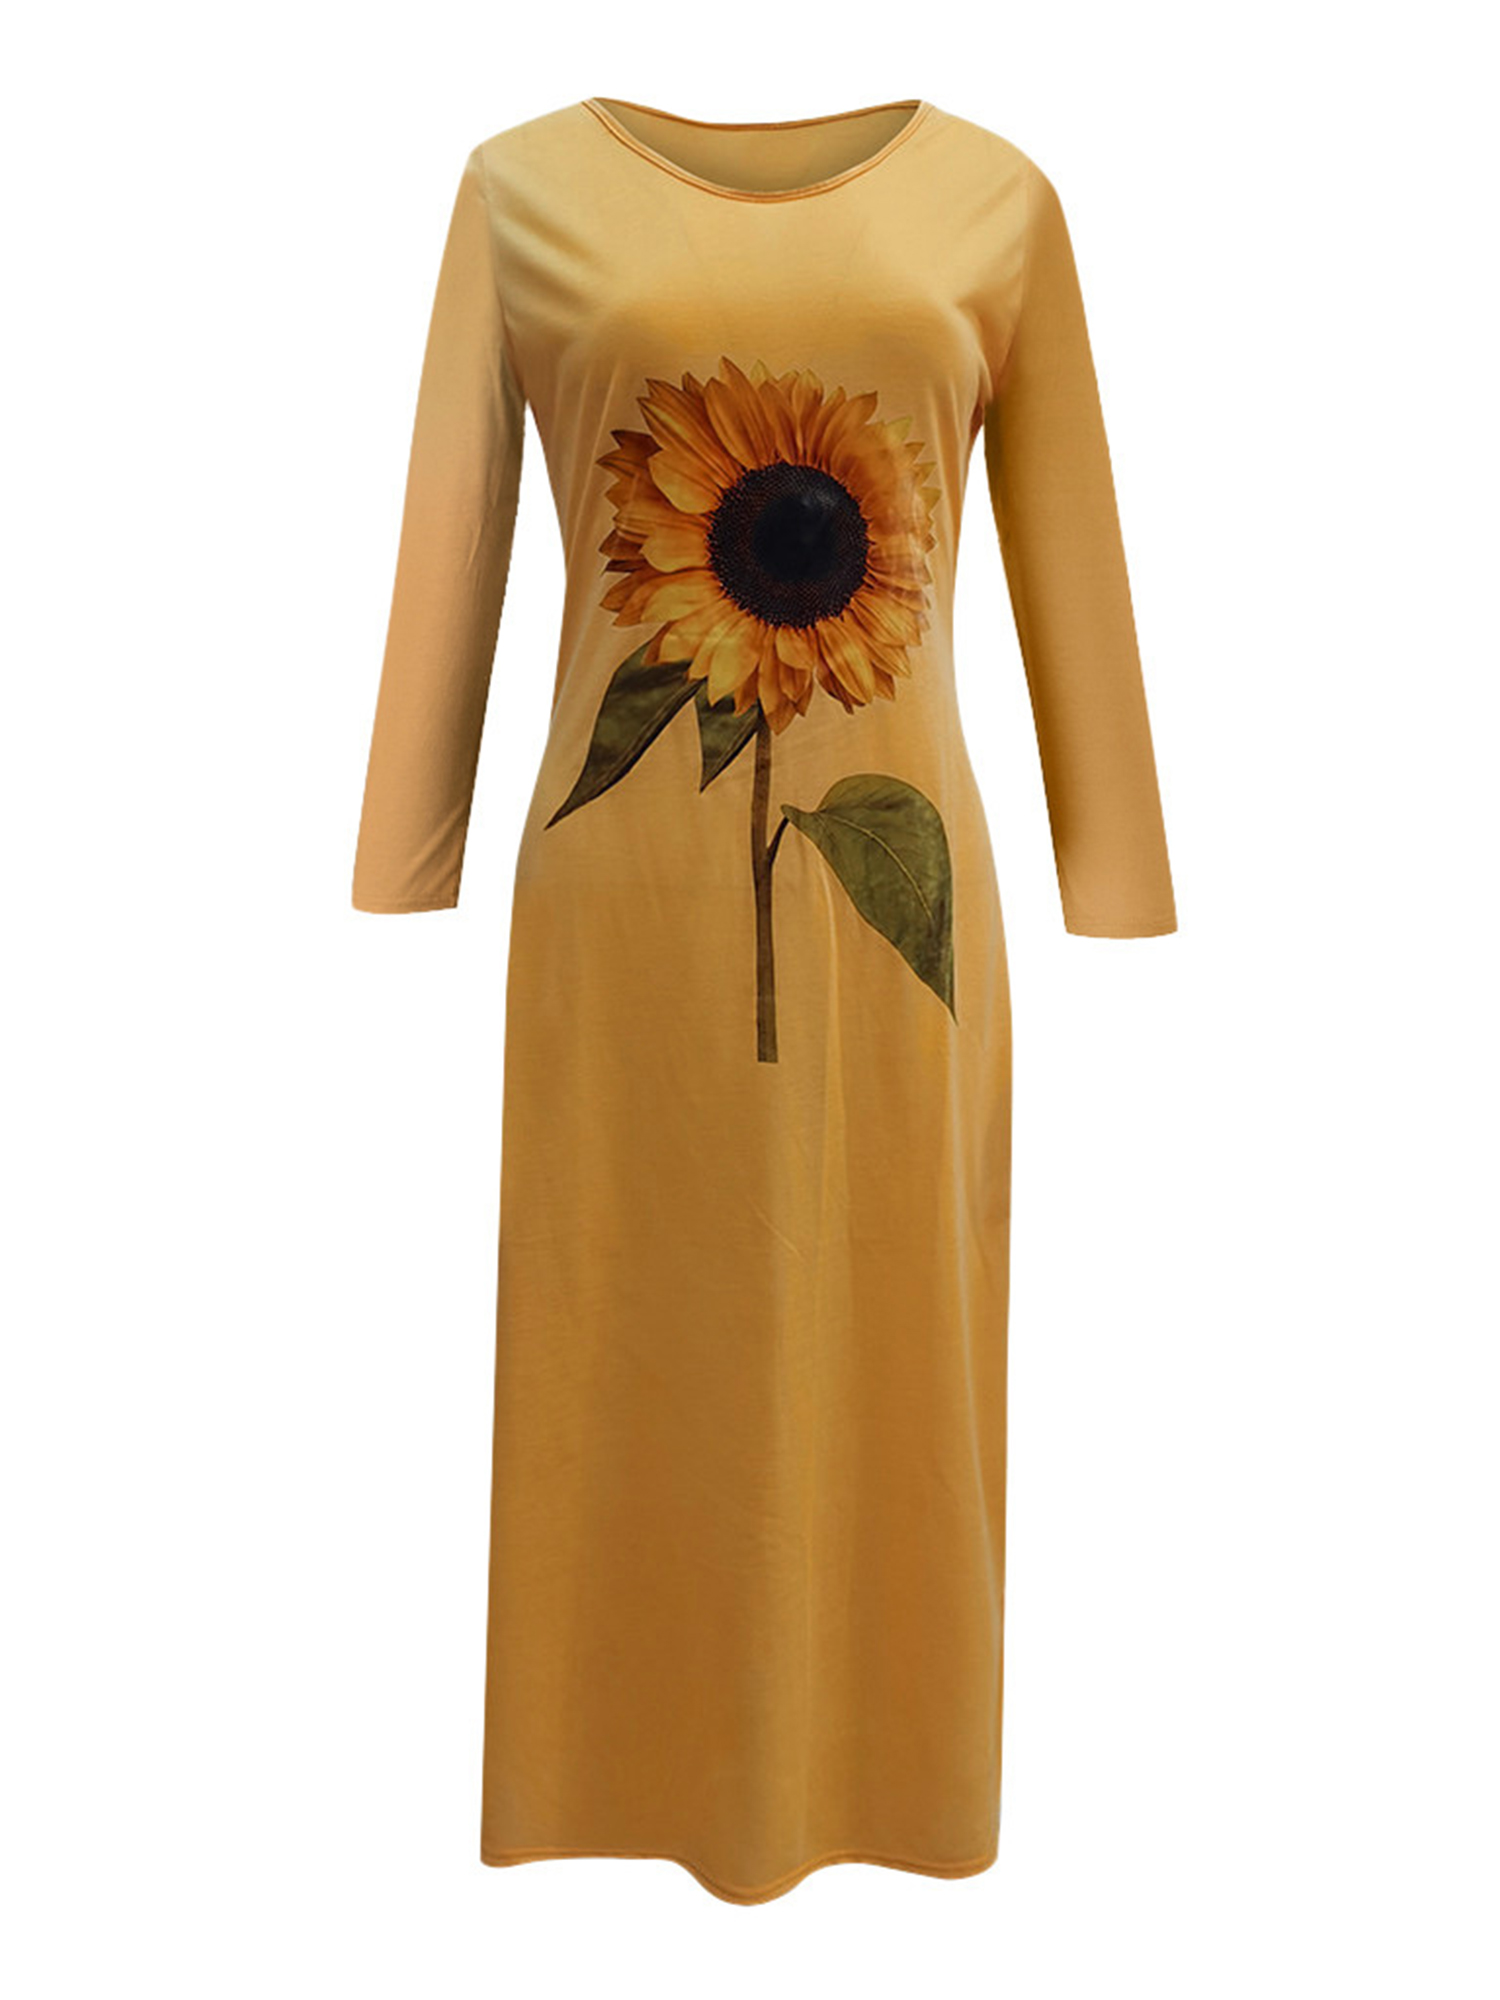 Women's Casual Sunflower Print Long Sleeves Ruffle Dress Print Boho Sundress - image 3 of 3